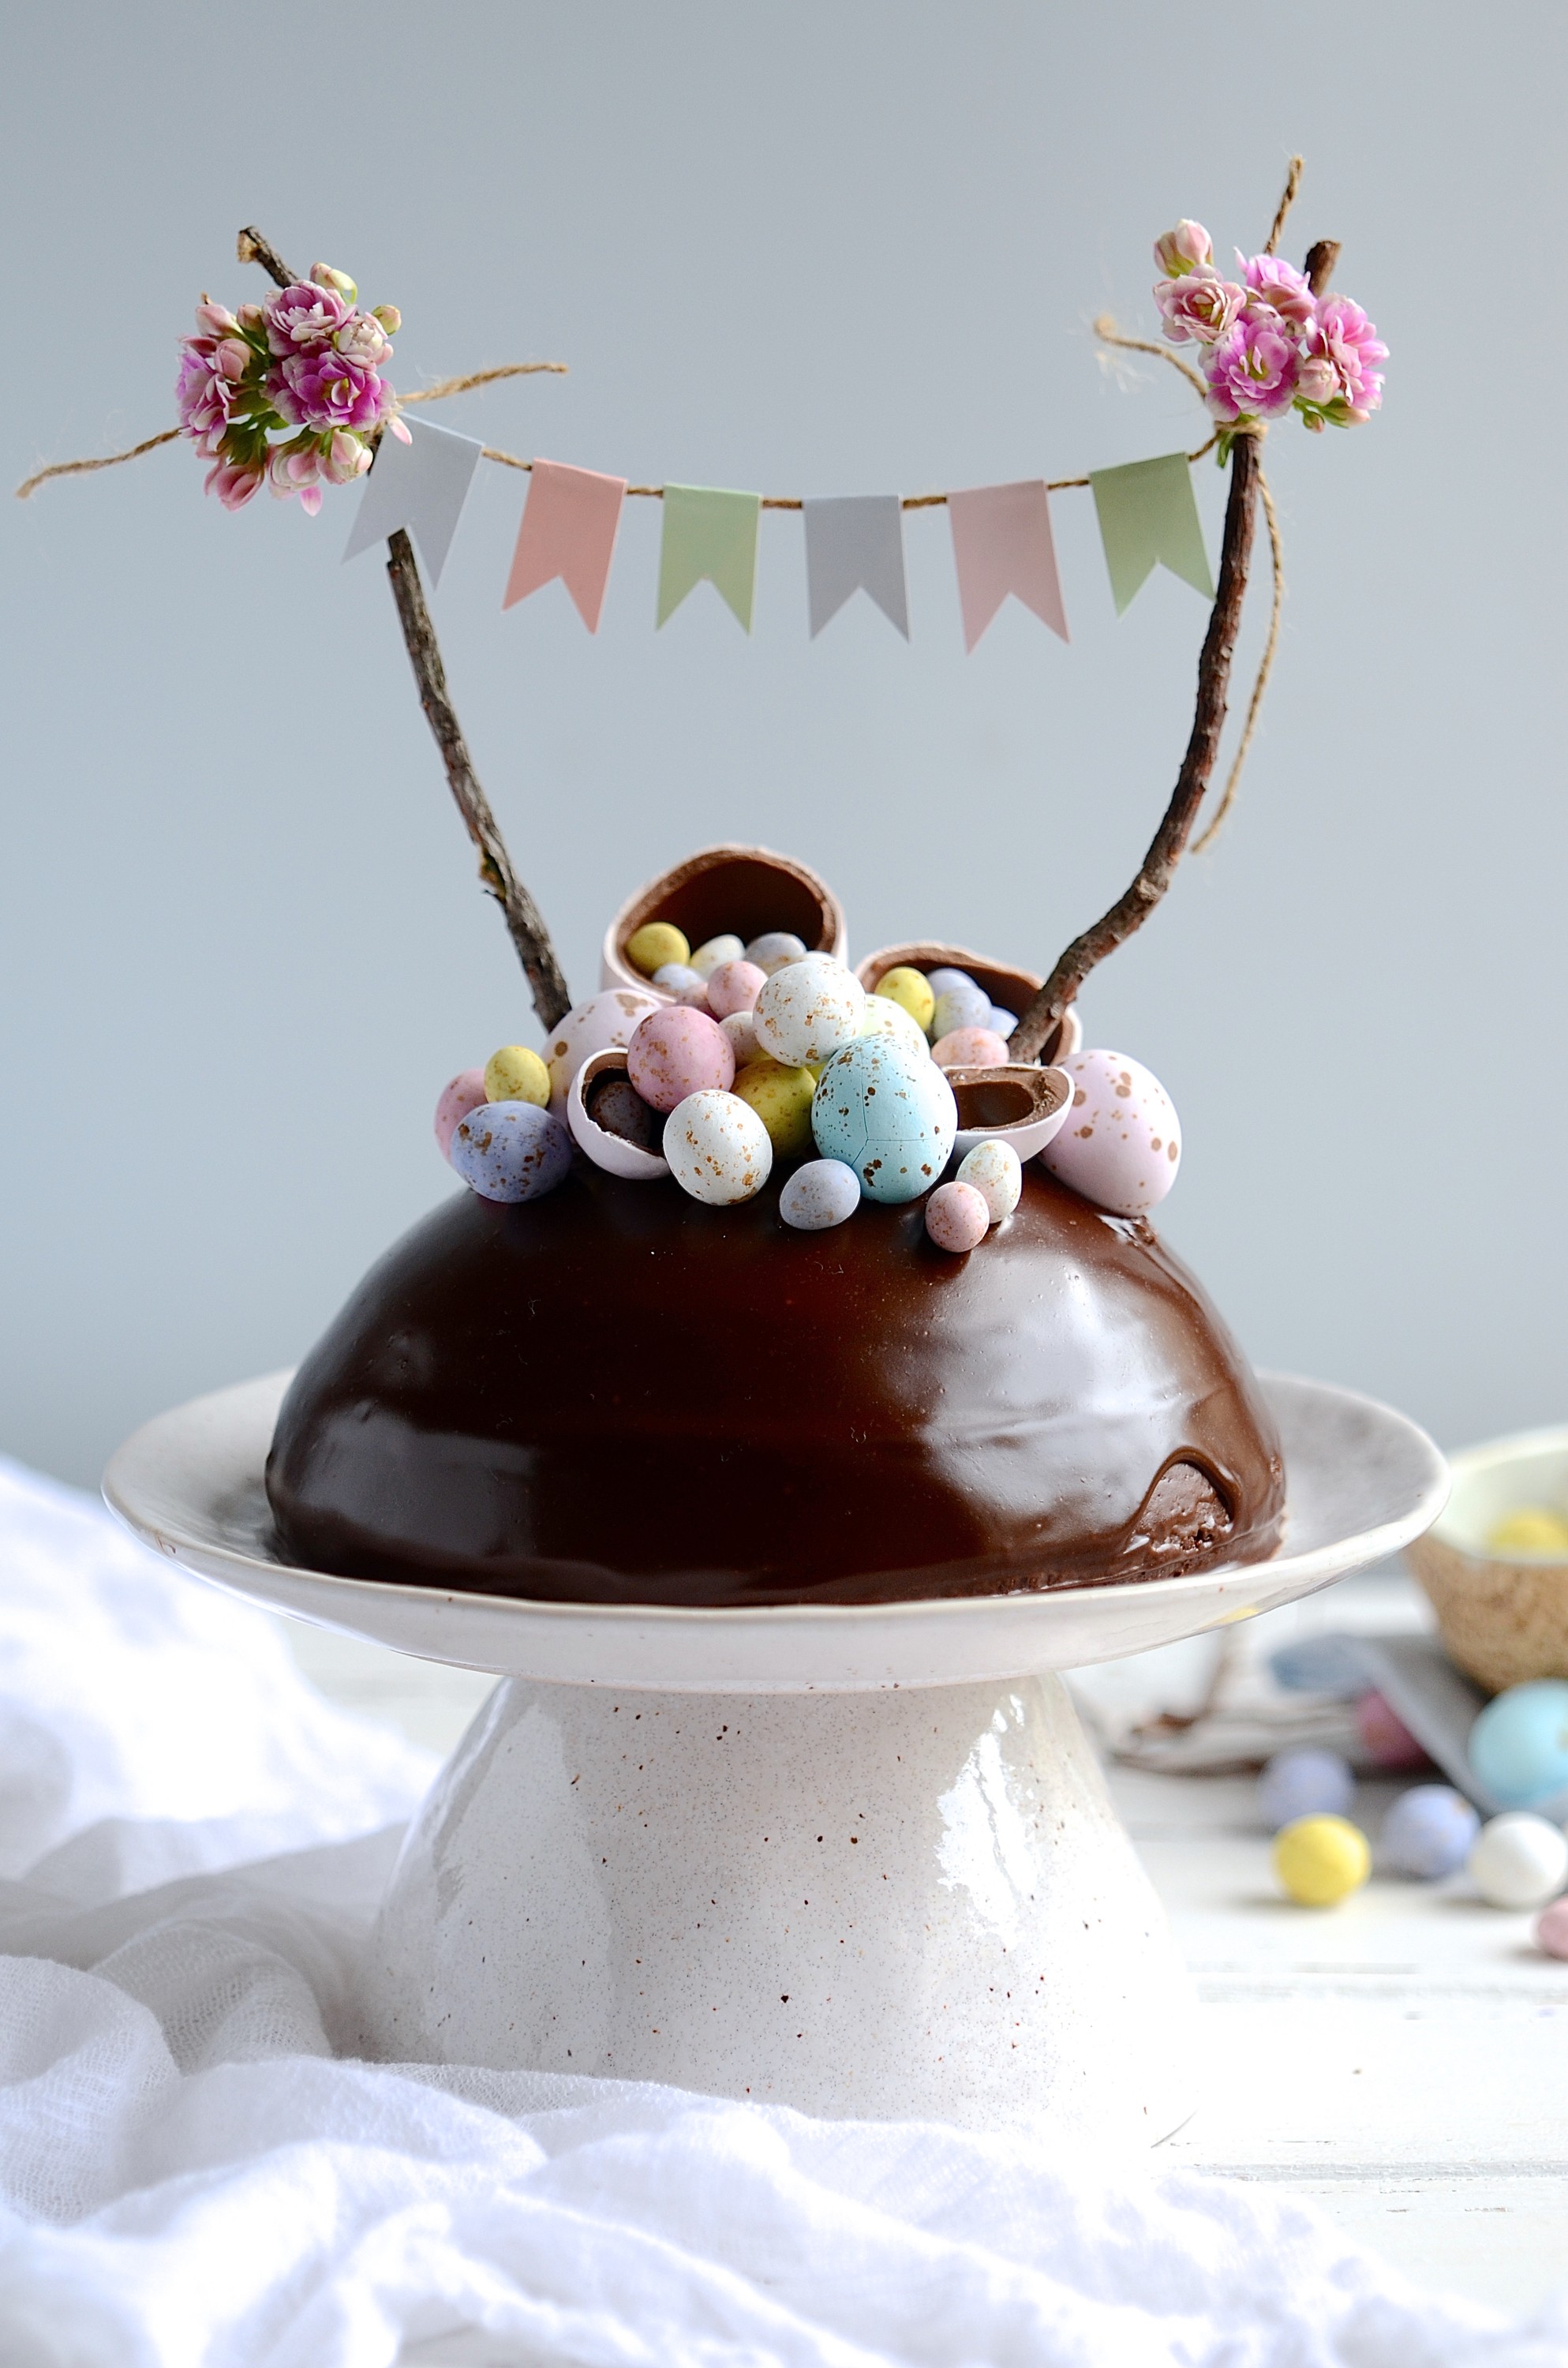 Chocolate Easter egg surprise cake | Bibbyskitchen Easter baking recipes